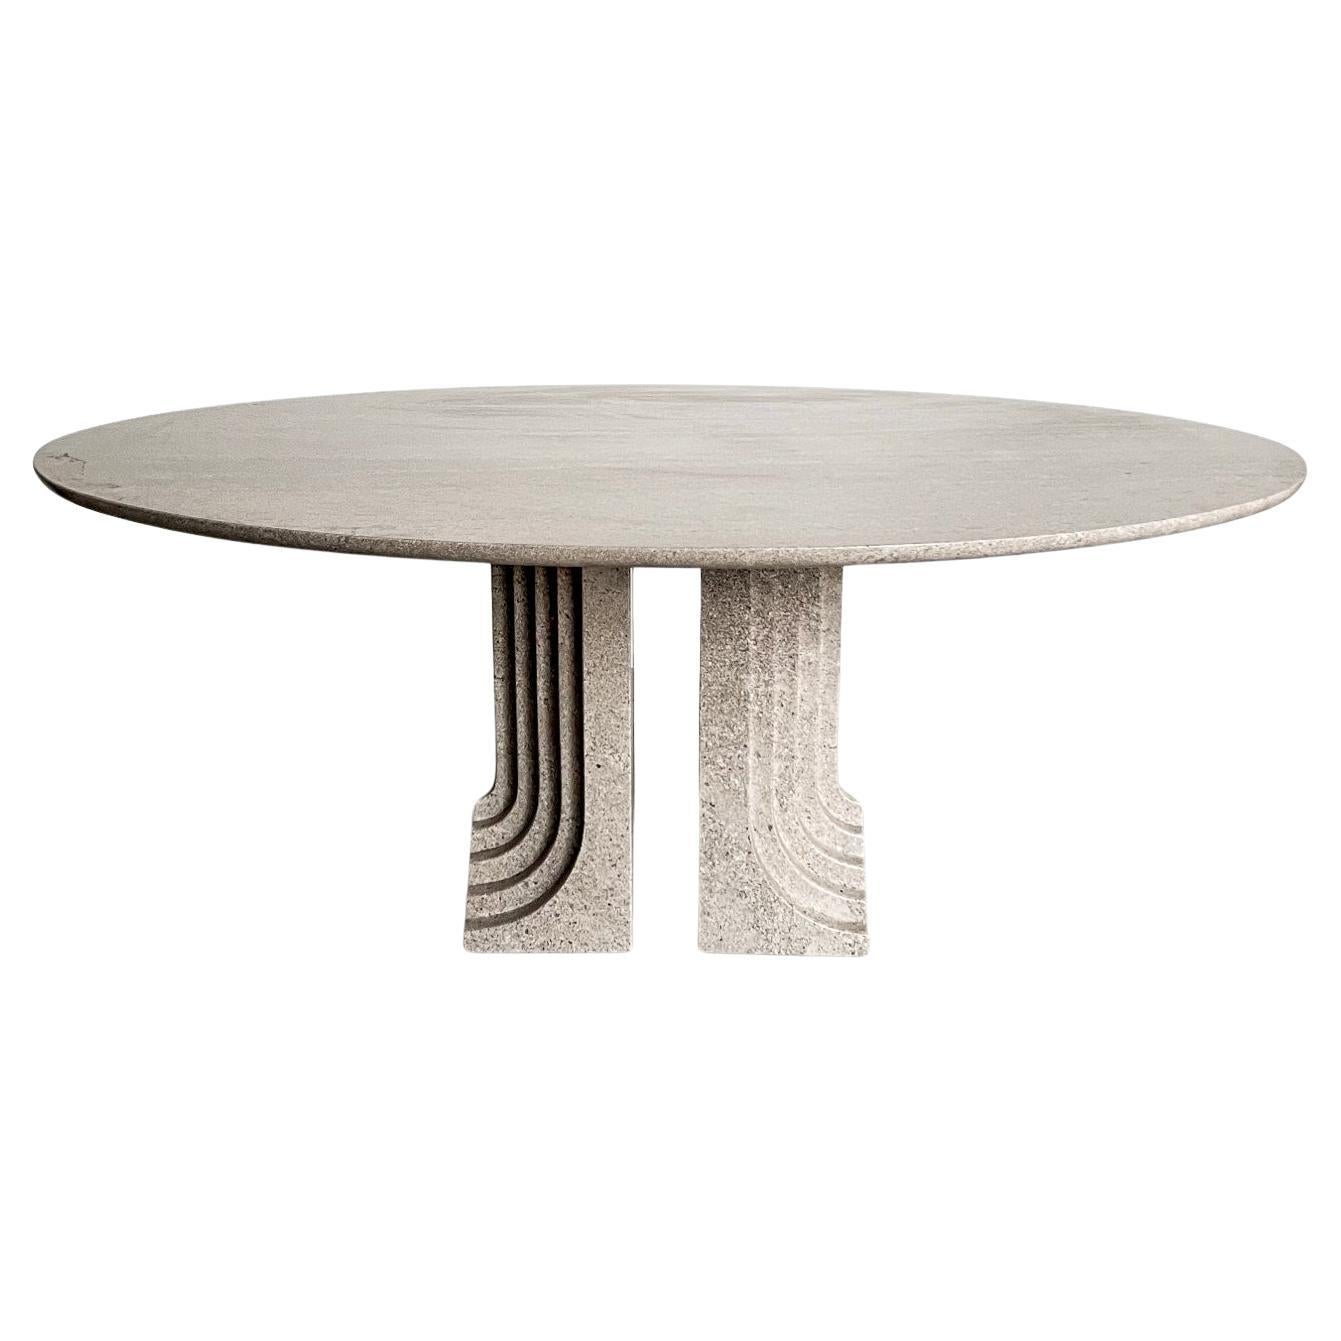 Samo marble table by Carlo Scarpa for Gavina